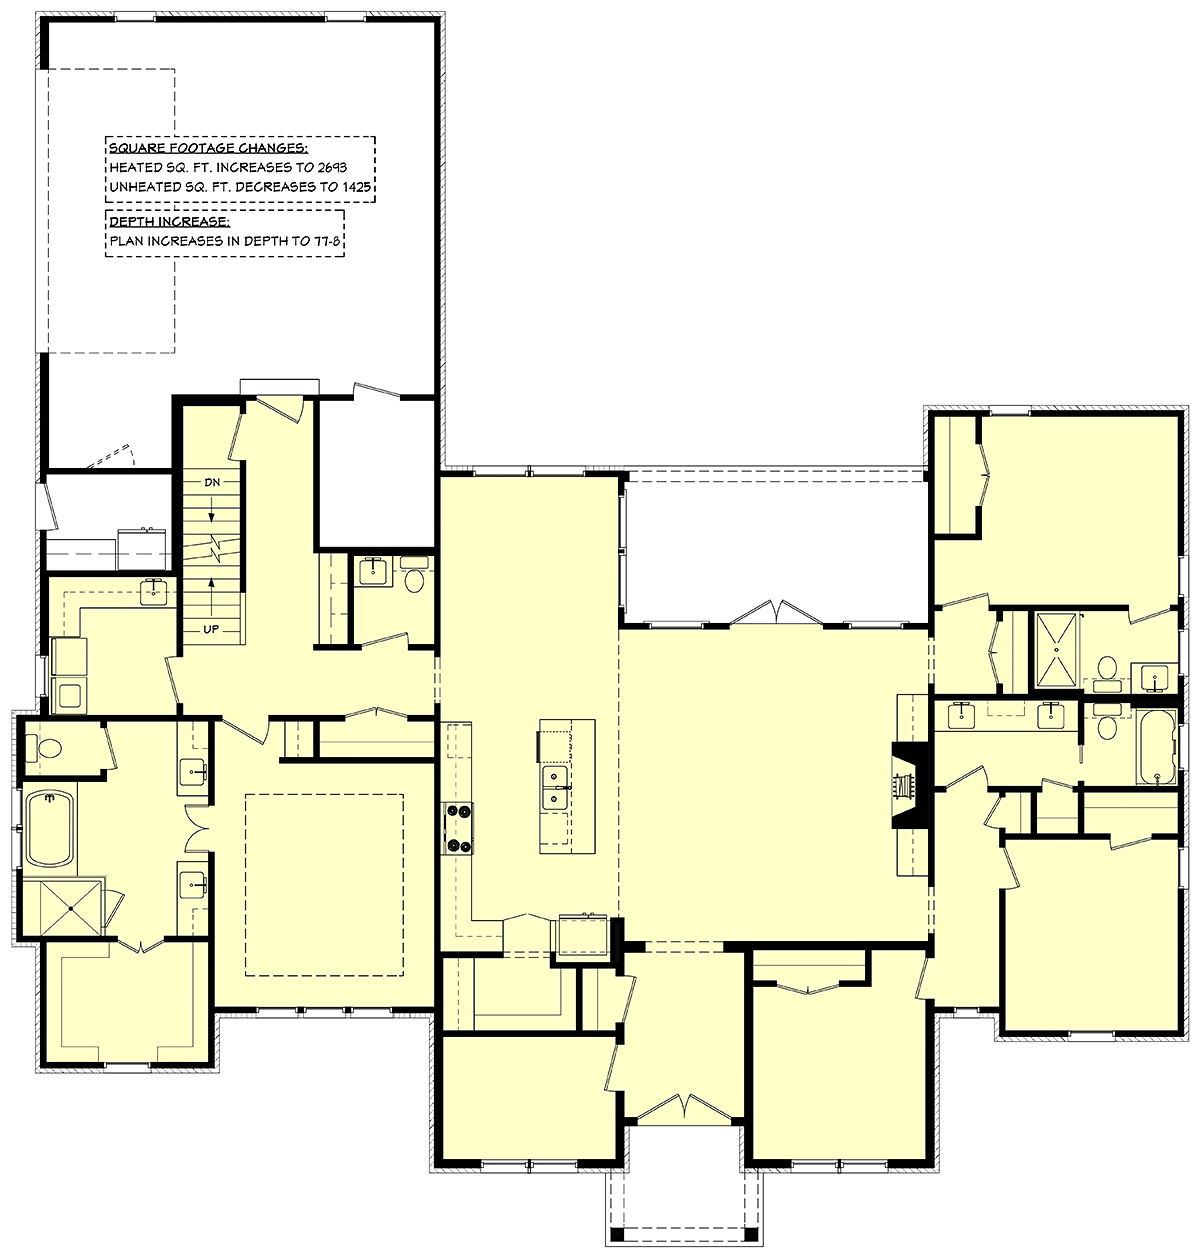 House Plan 80837 Alternate Level One